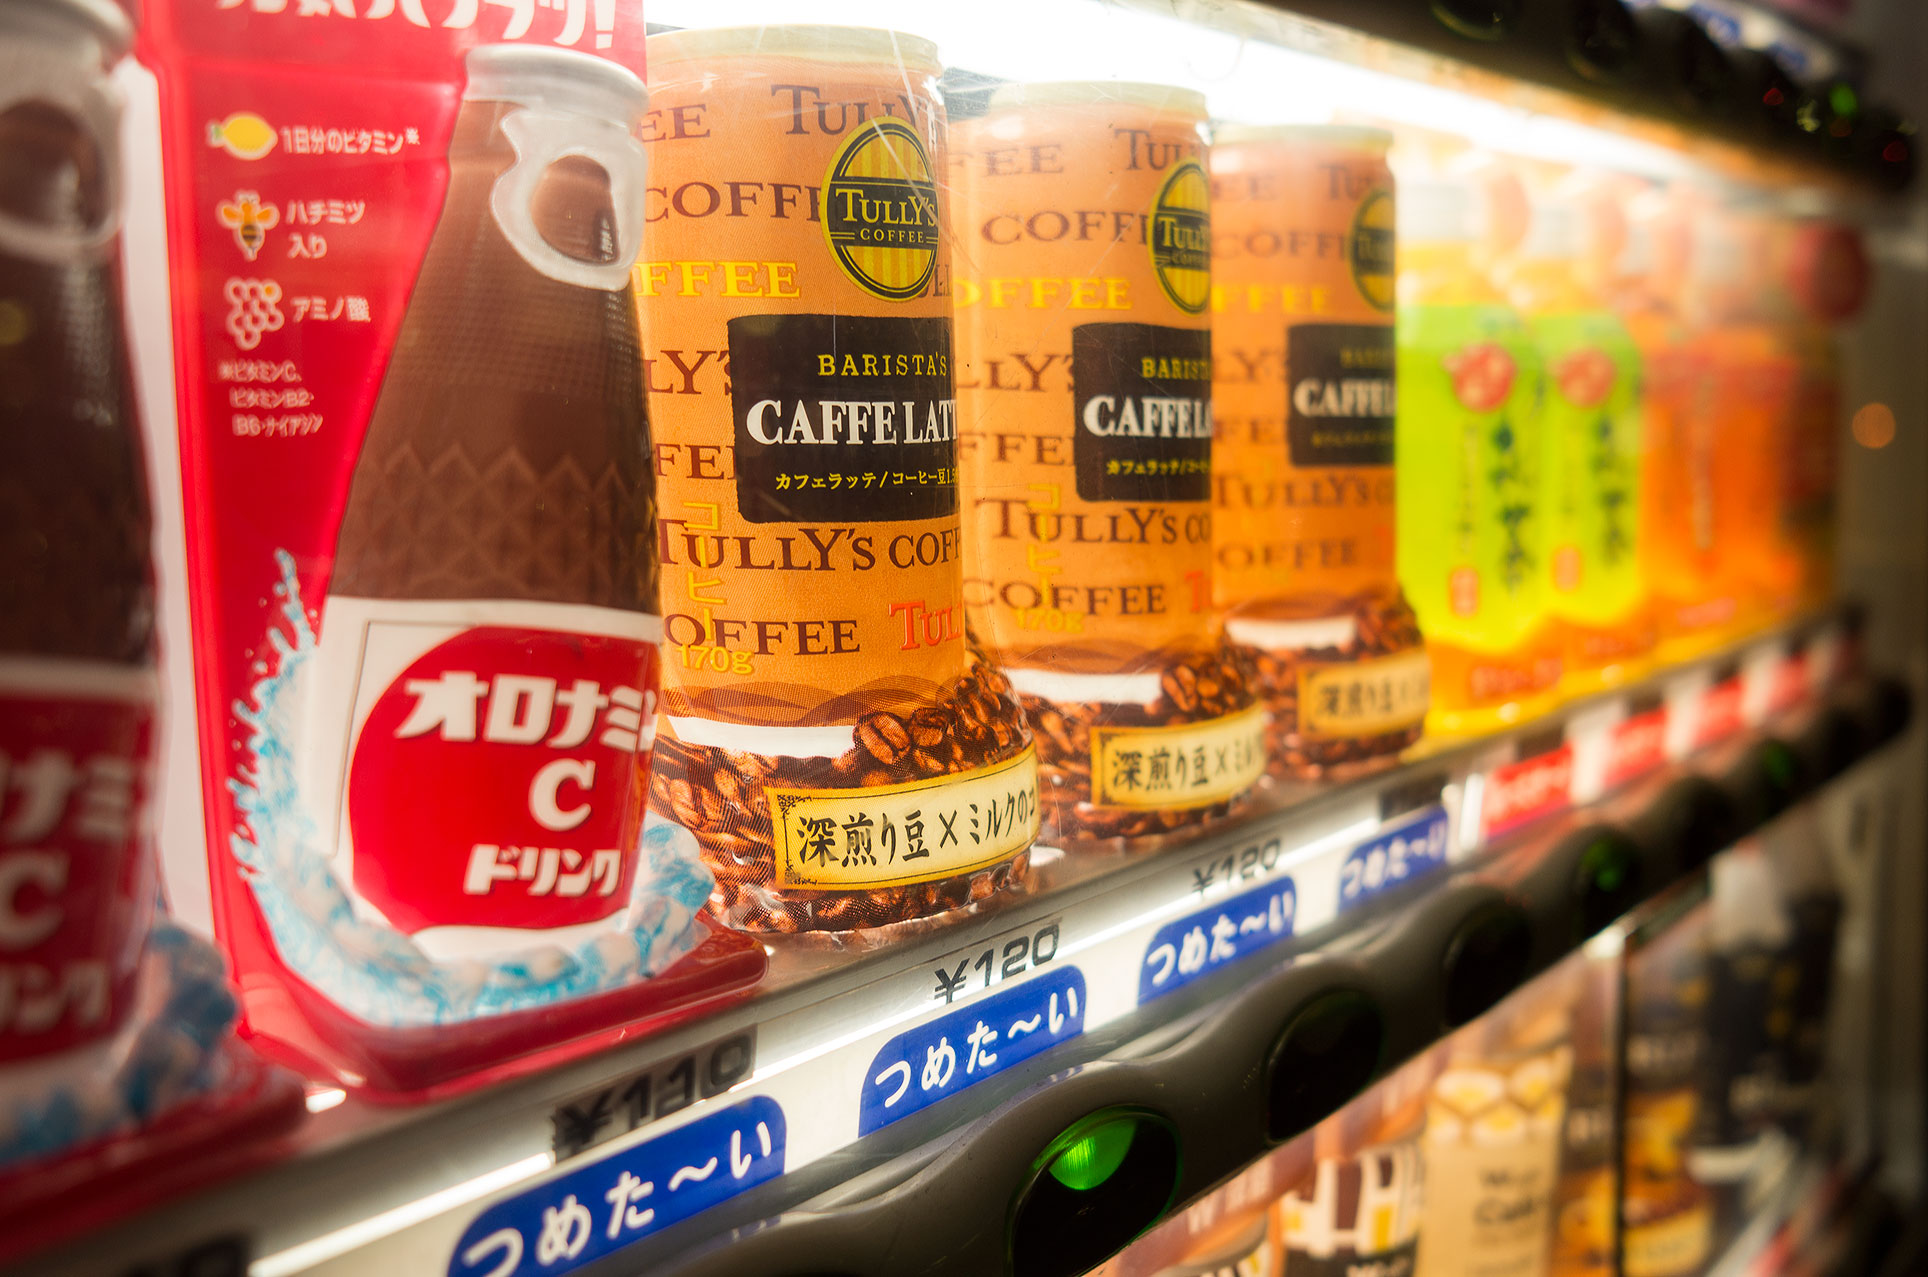 coffee vending machine, Kyoto, 2013